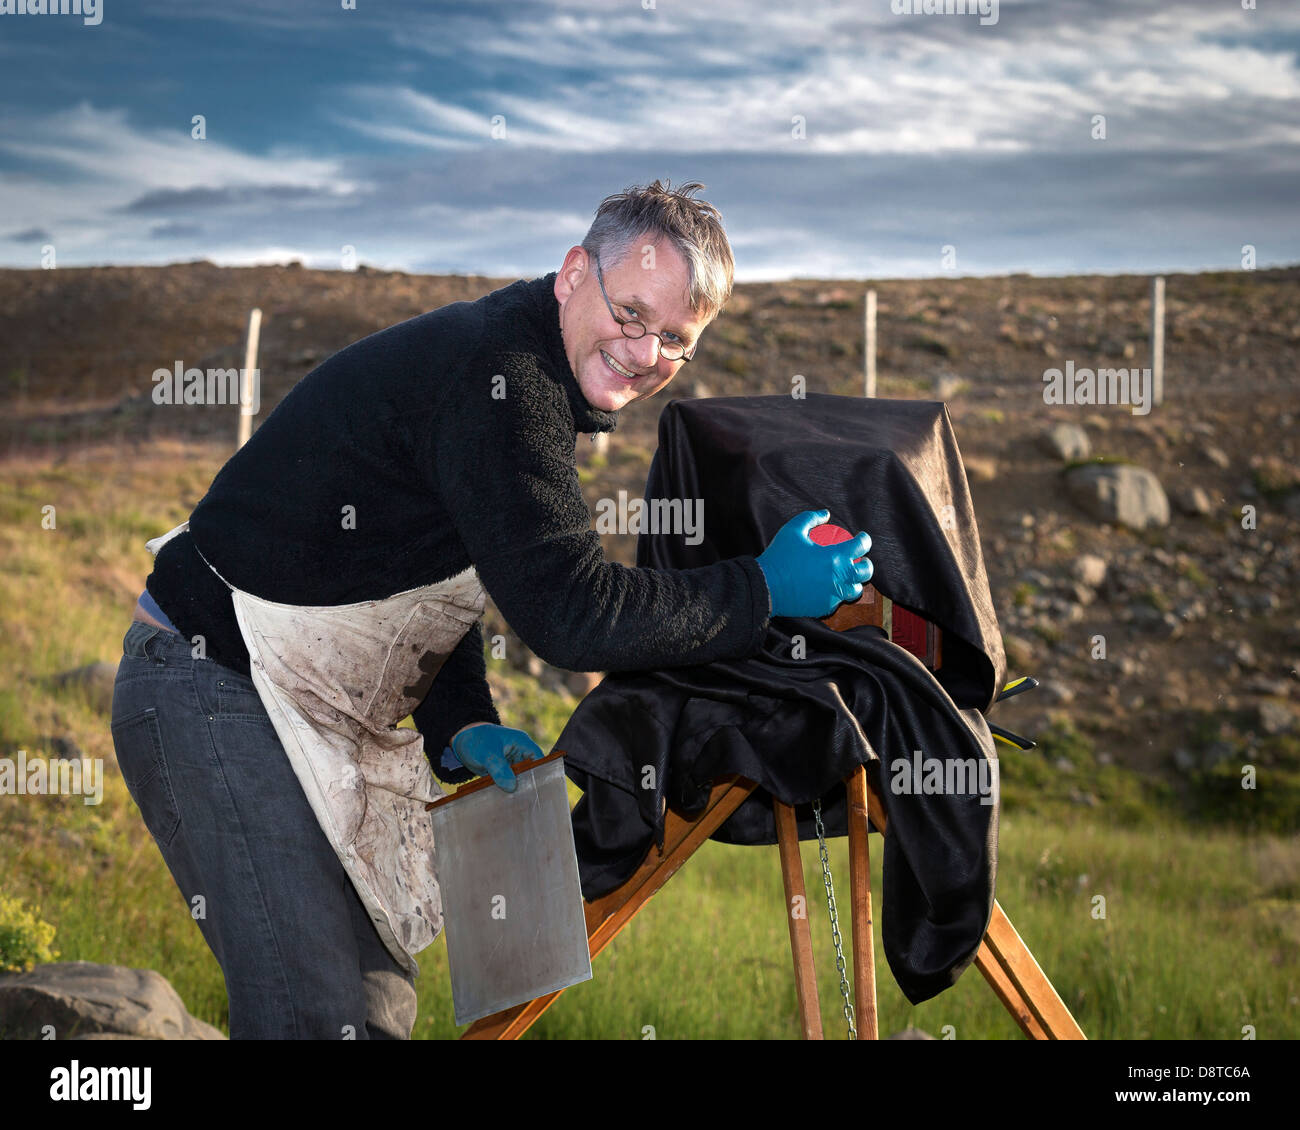 Photographer using old camera and wet plates (collodion process), Eyjafordur, Akureyri, Iceland Stock Photo